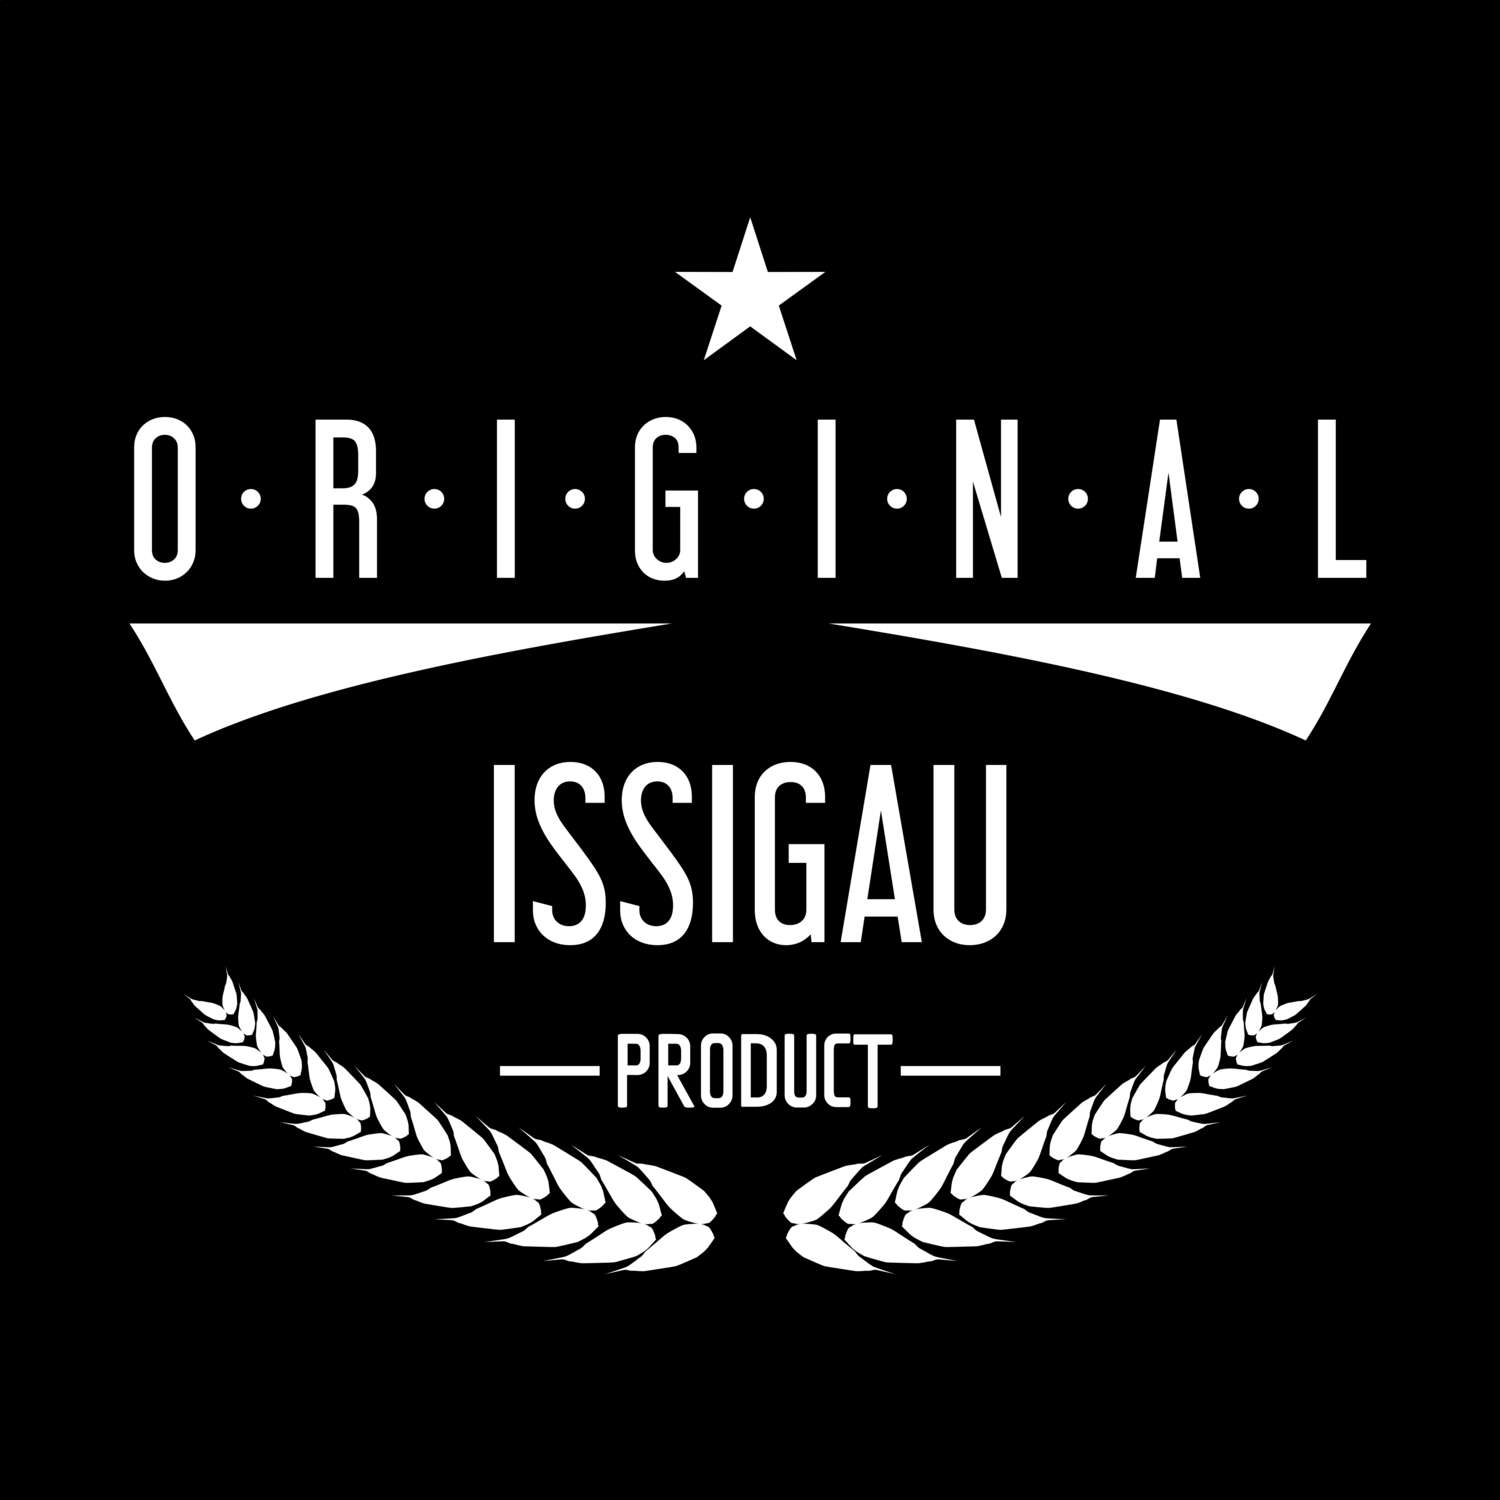 Issigau T-Shirt »Original Product«